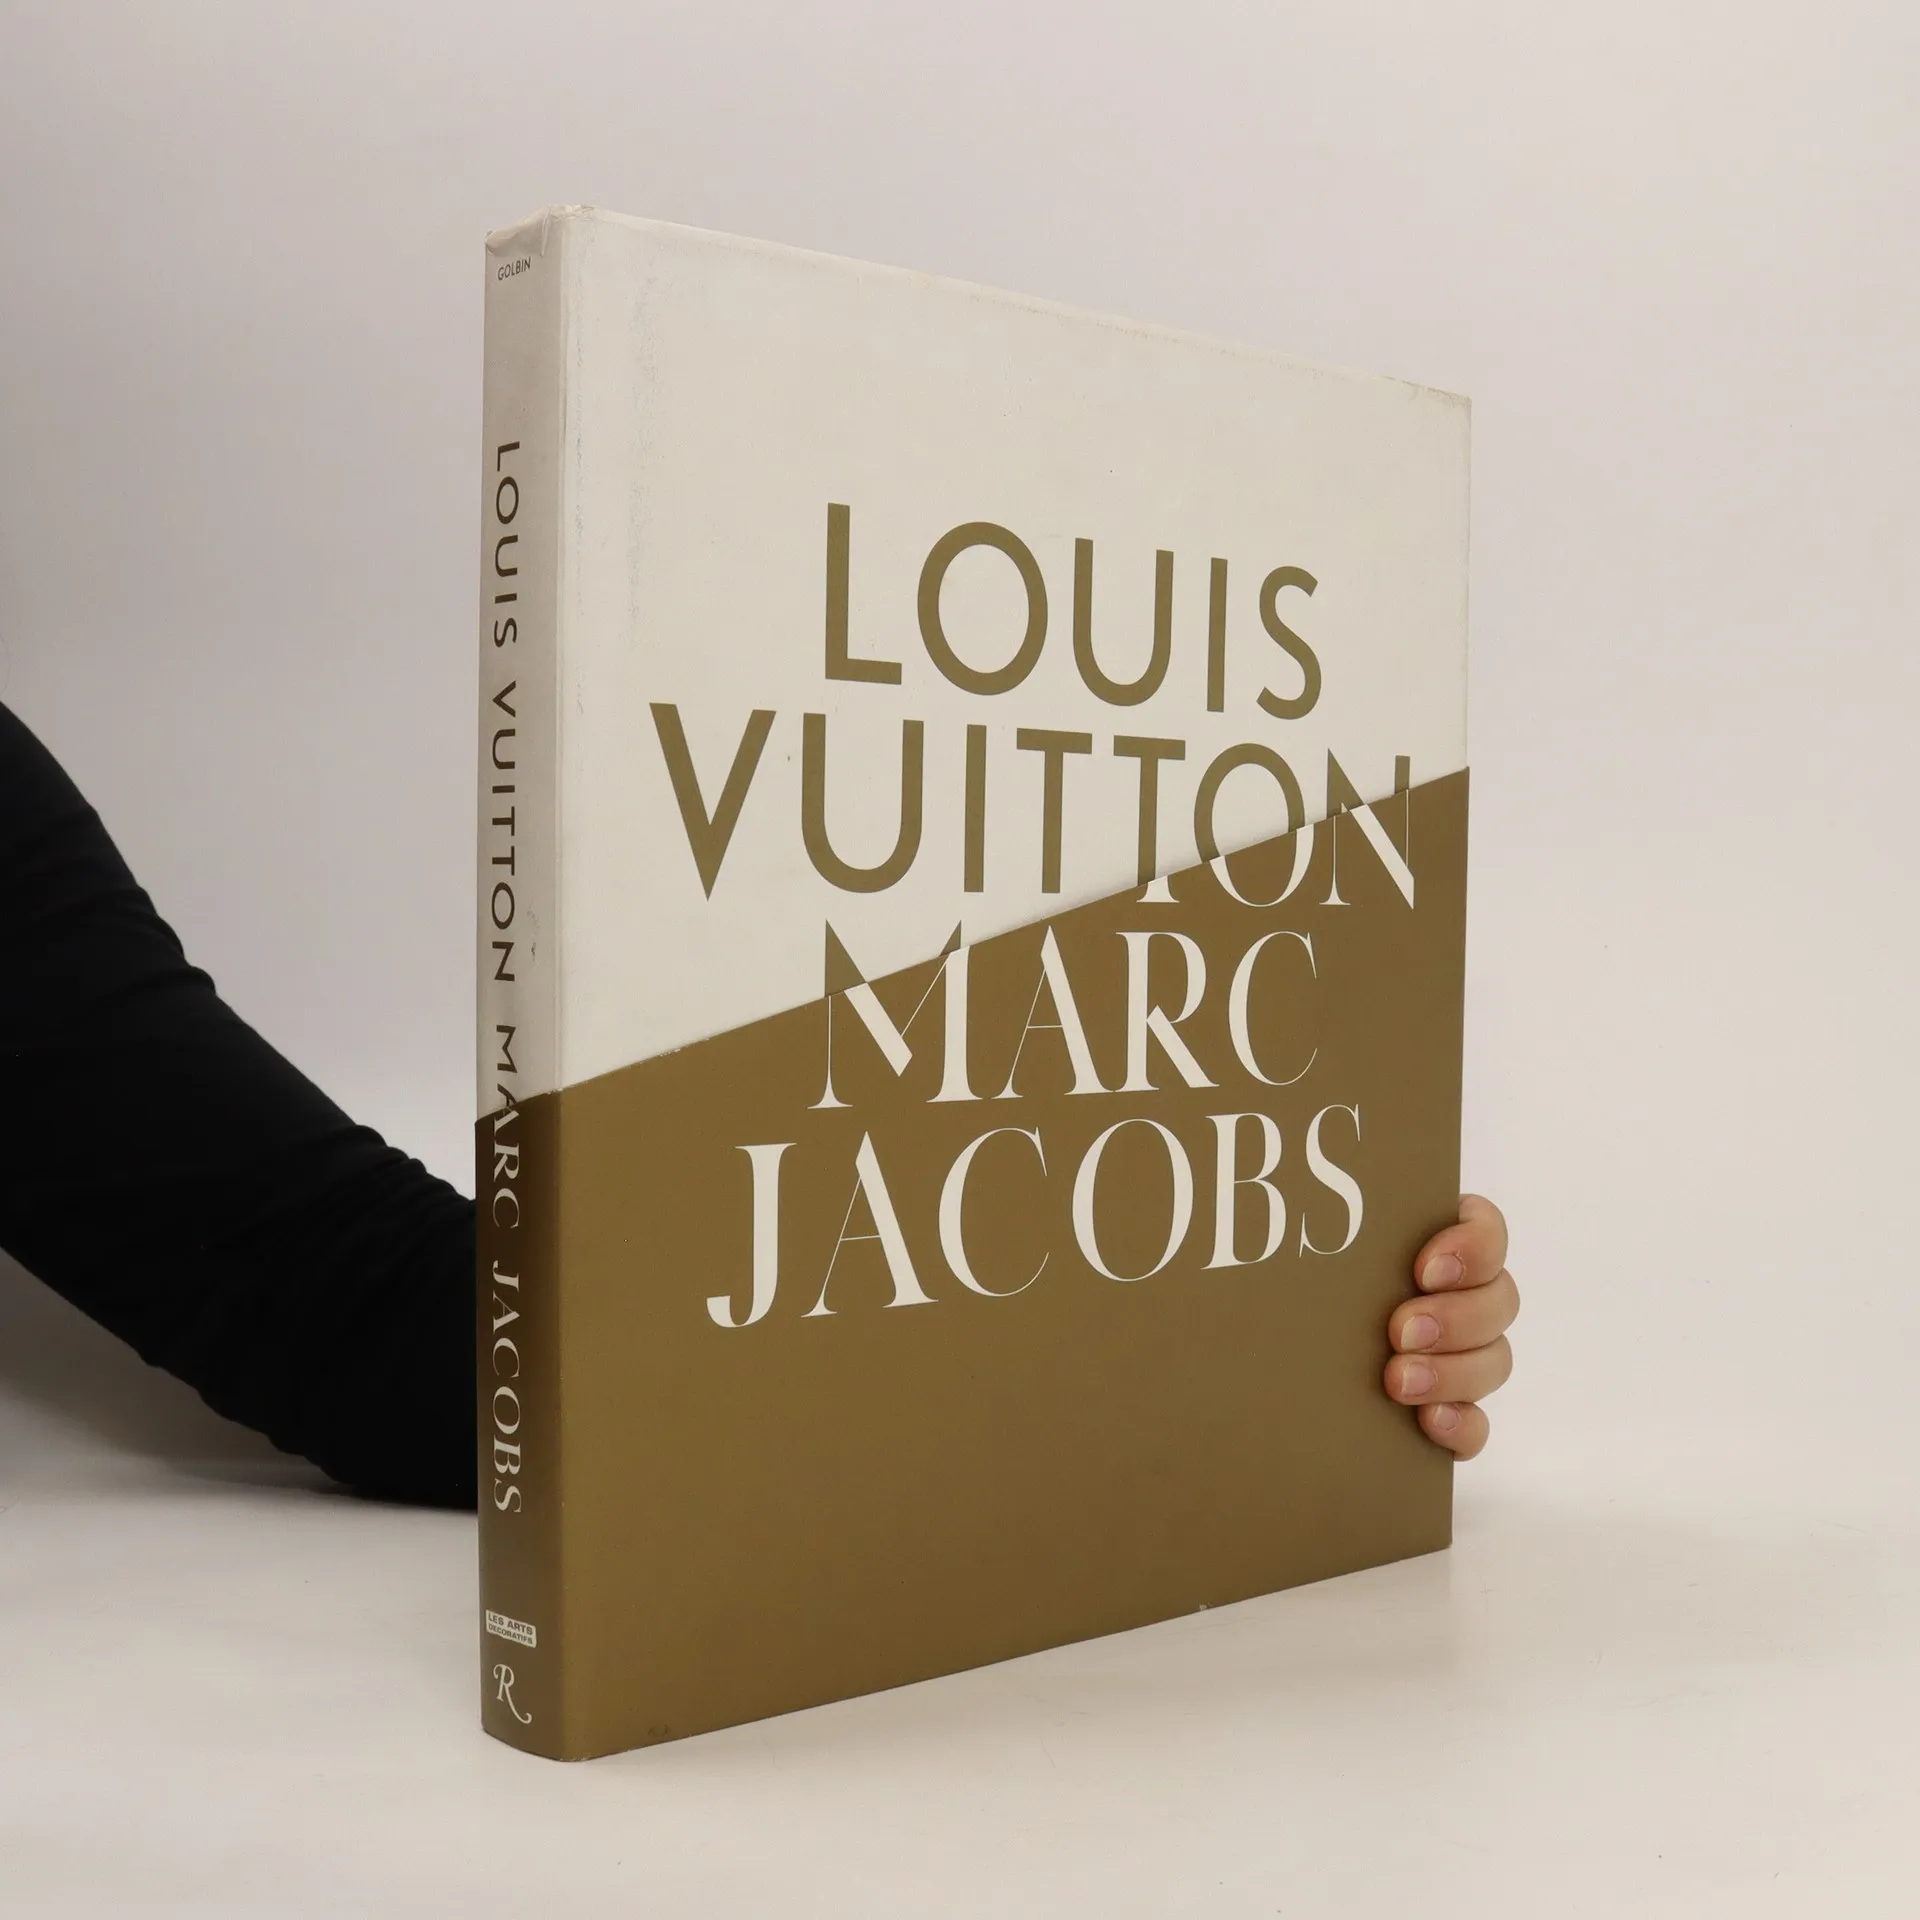 Louis Vuitton Marc Jacobs - Pamela Golbin 